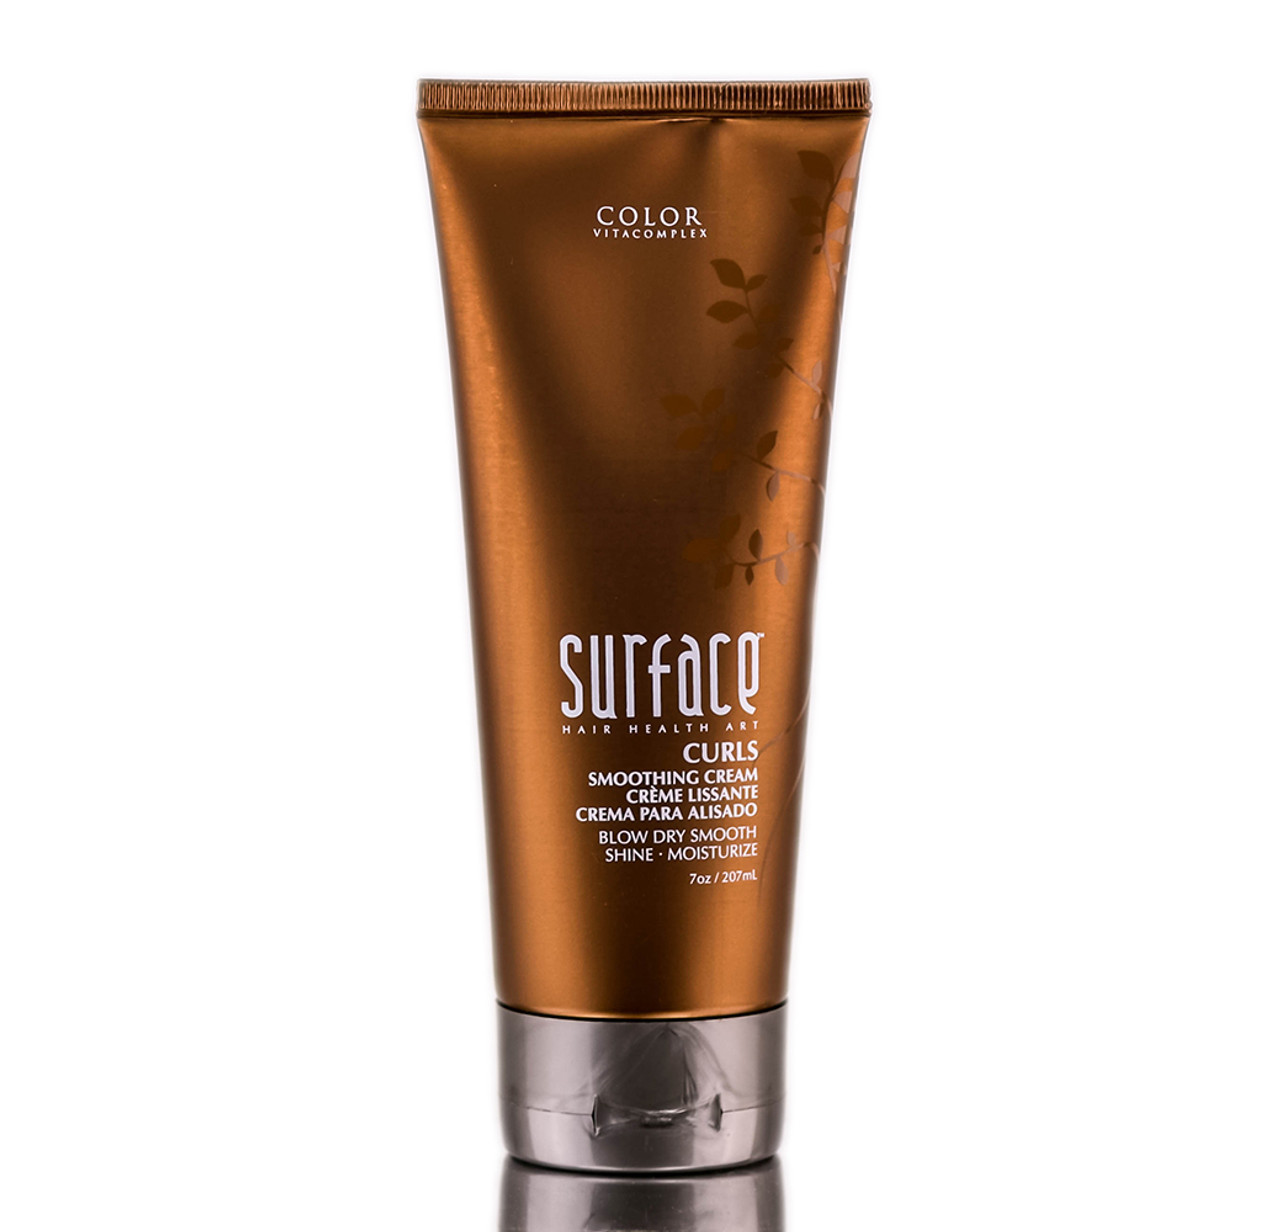 Surface Curls Smoothing Cream - SleekShop.com (formerly Sleekhair)